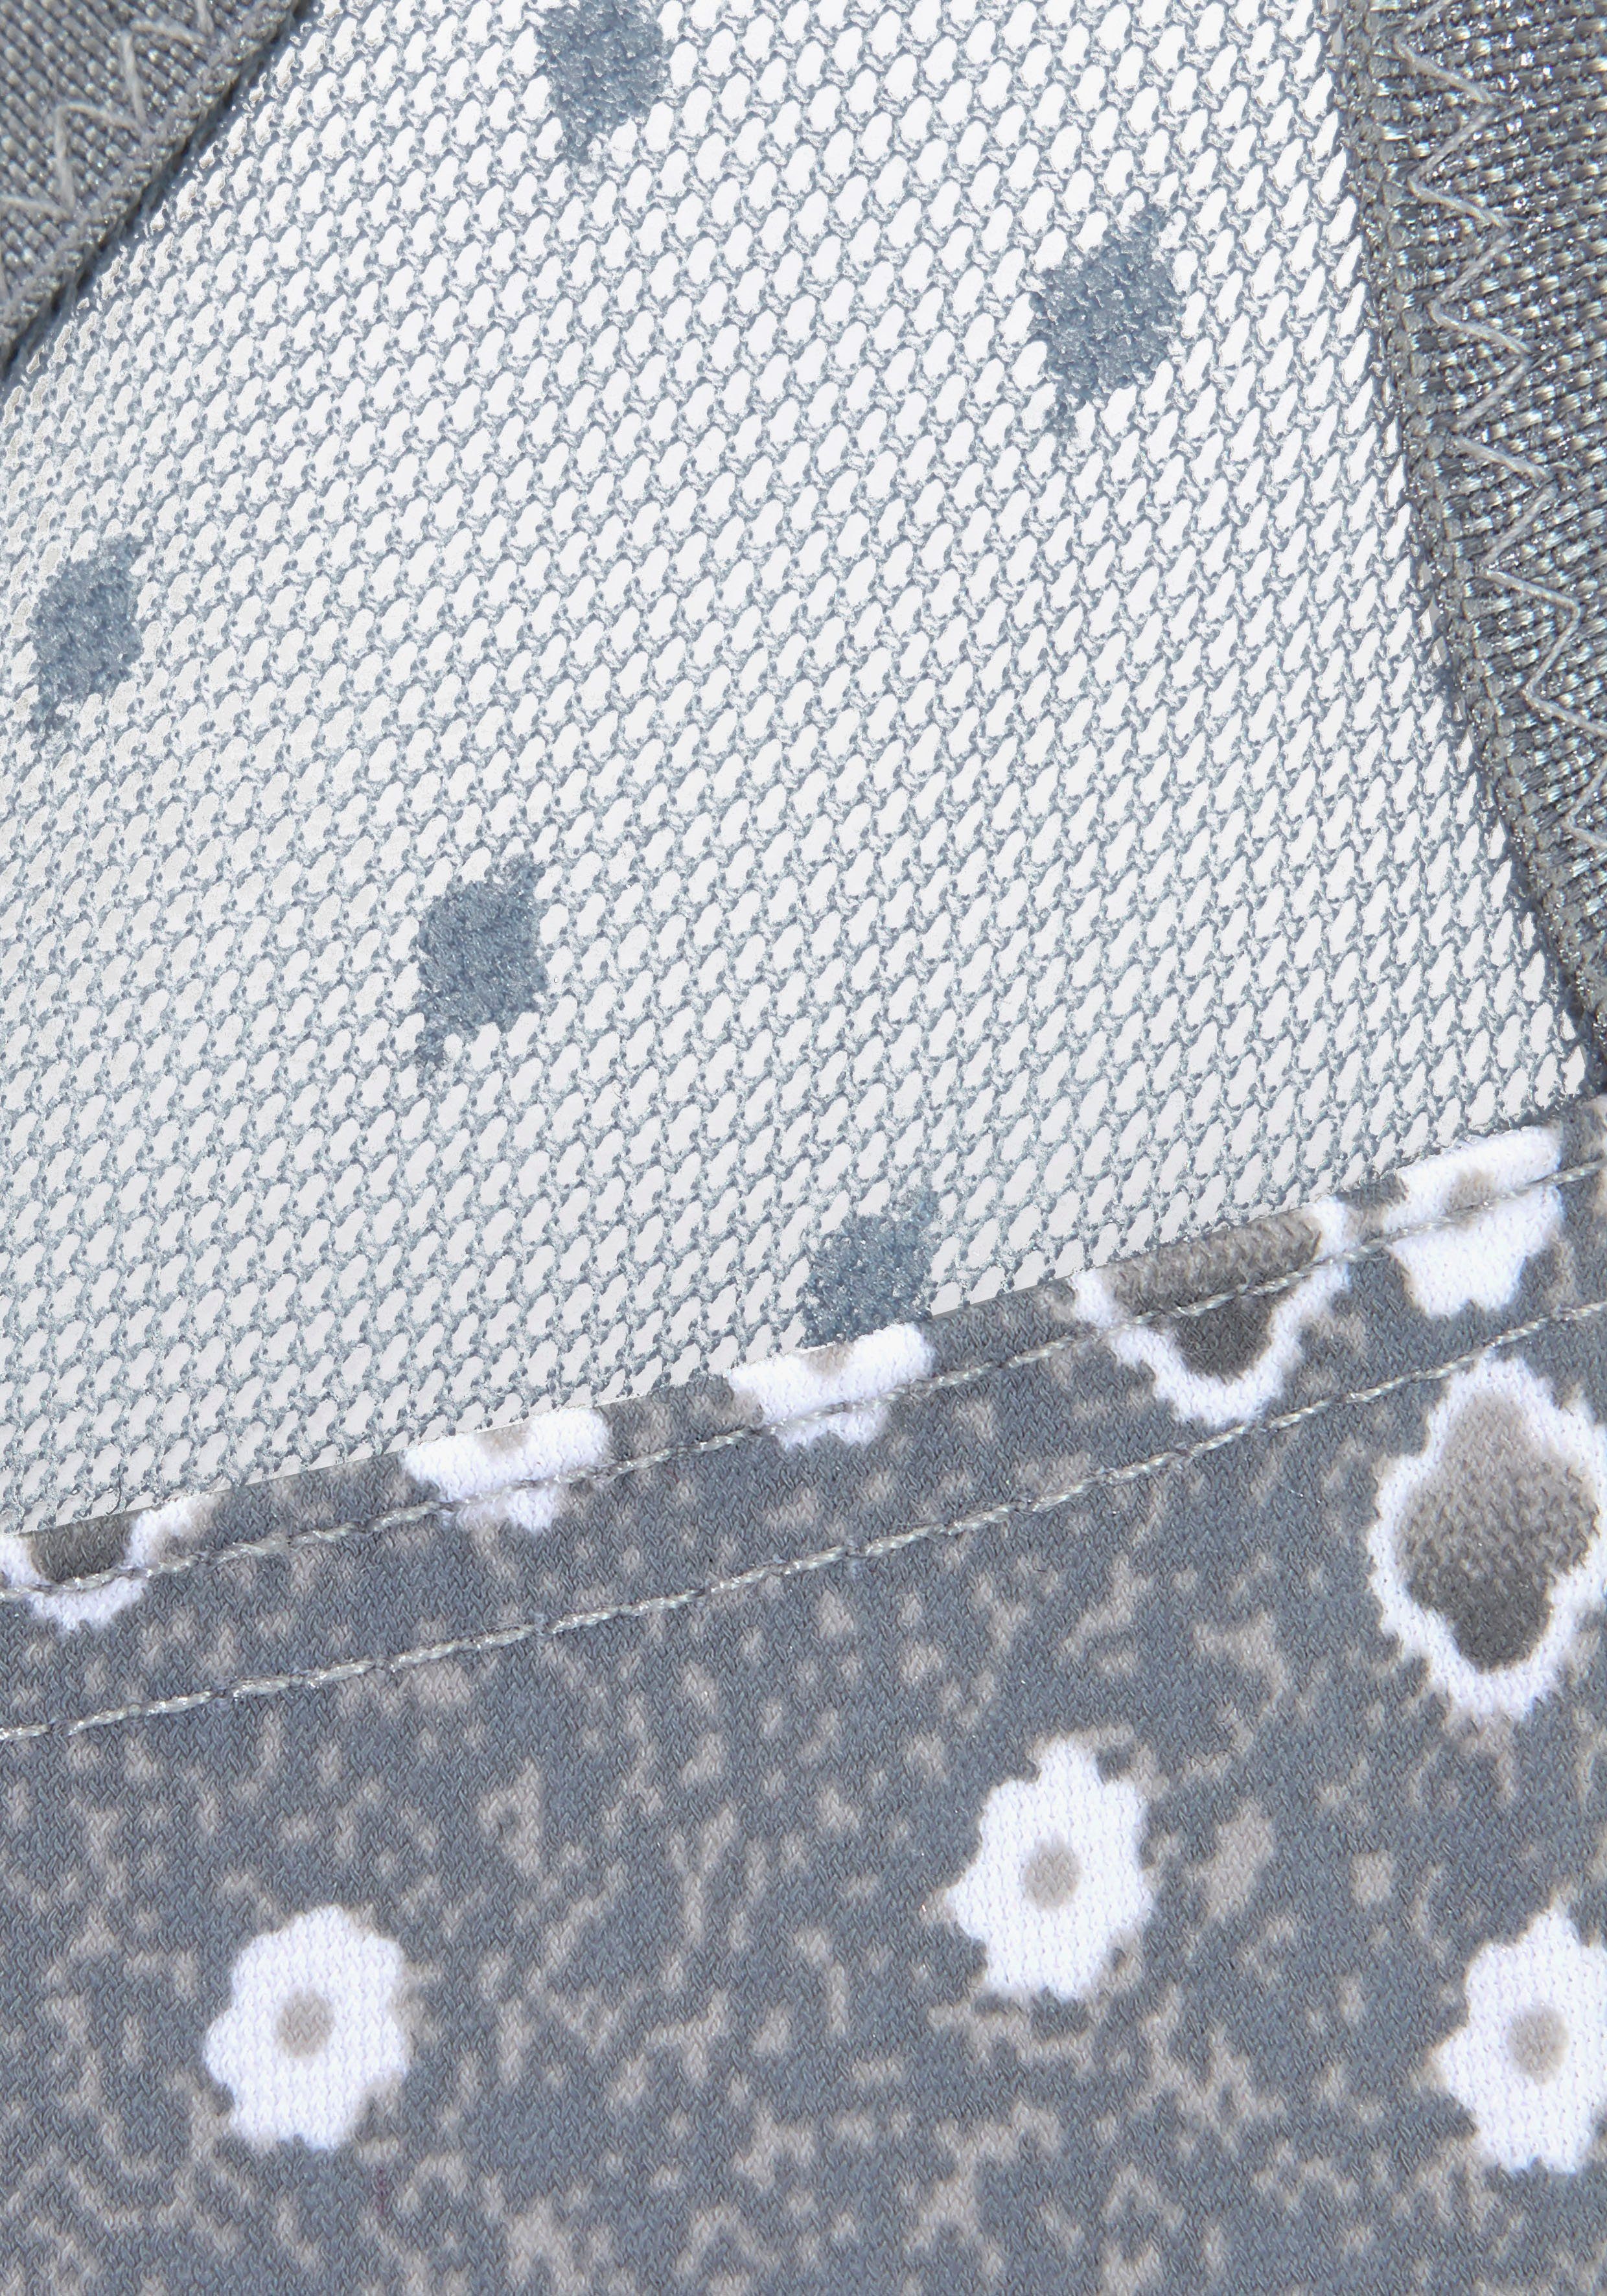 Nuance Minimizer-BH mit Bügel grau-bedruckt transparentem im Dessous Tüll und Obercup, Basic leicht